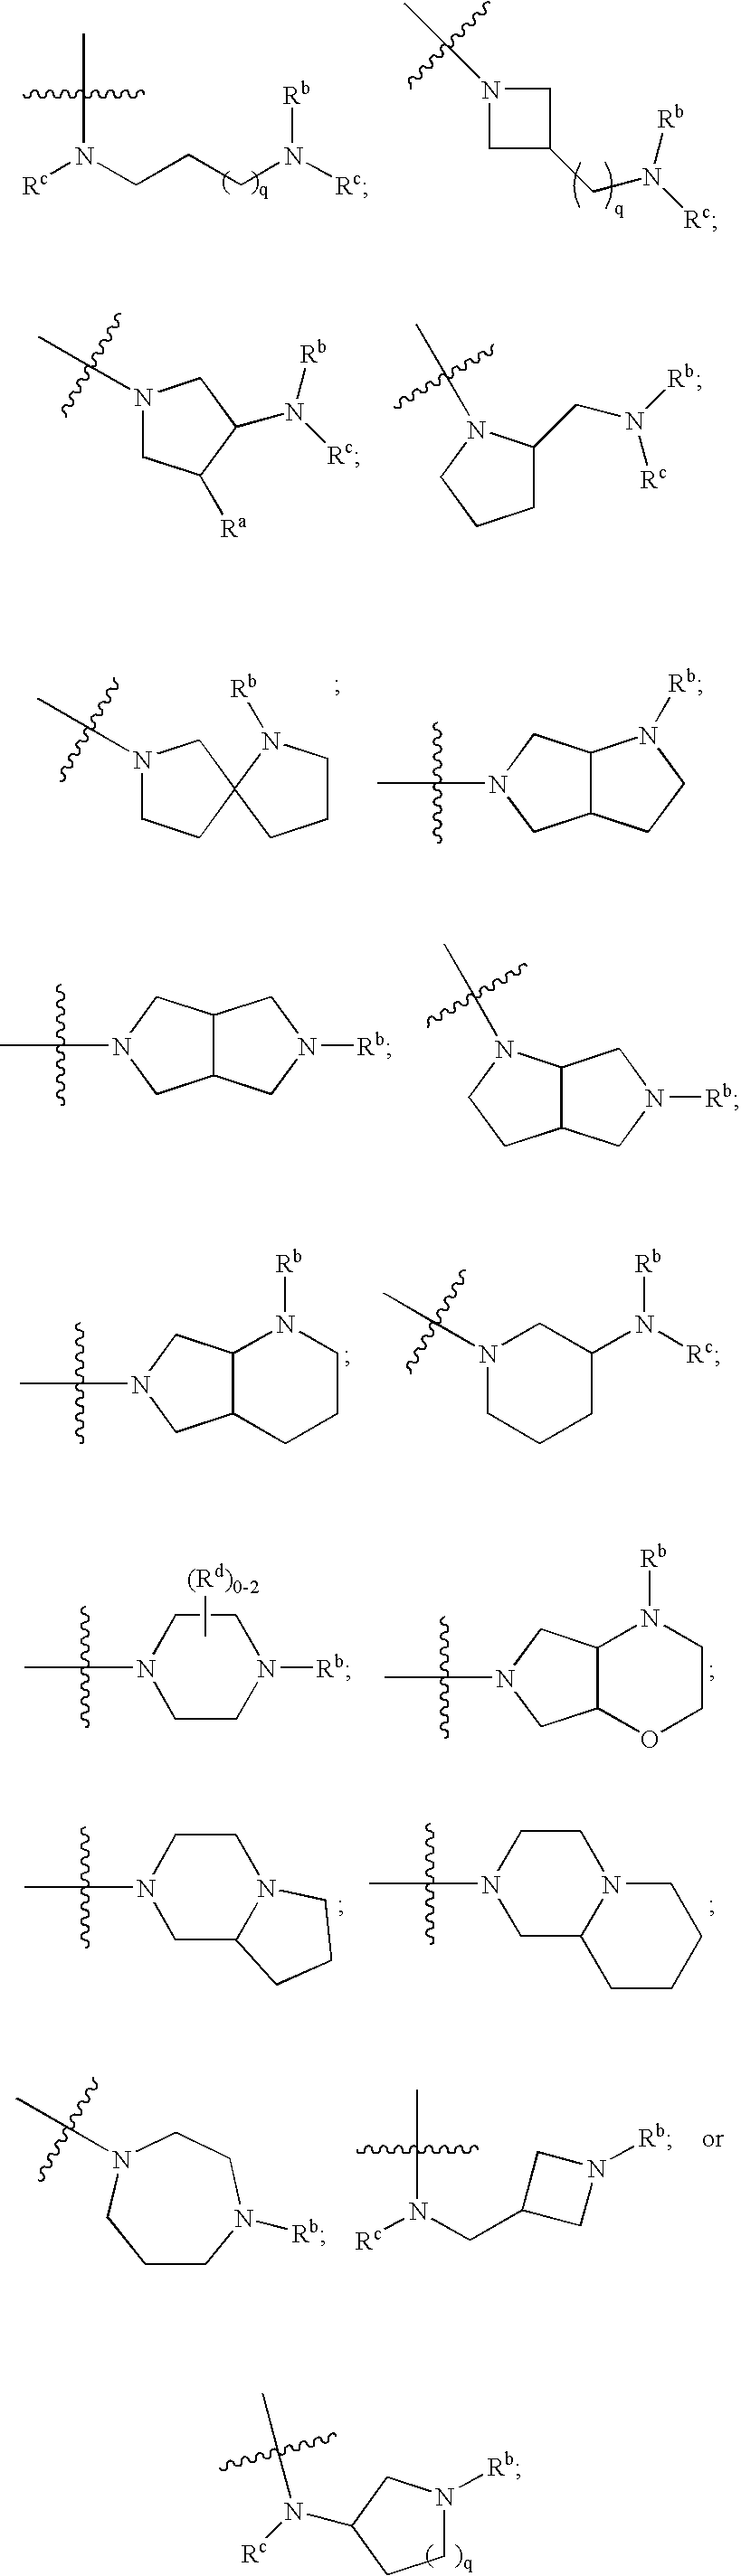 2-Aminopyrimidine modulators of the histamine H4 receptor